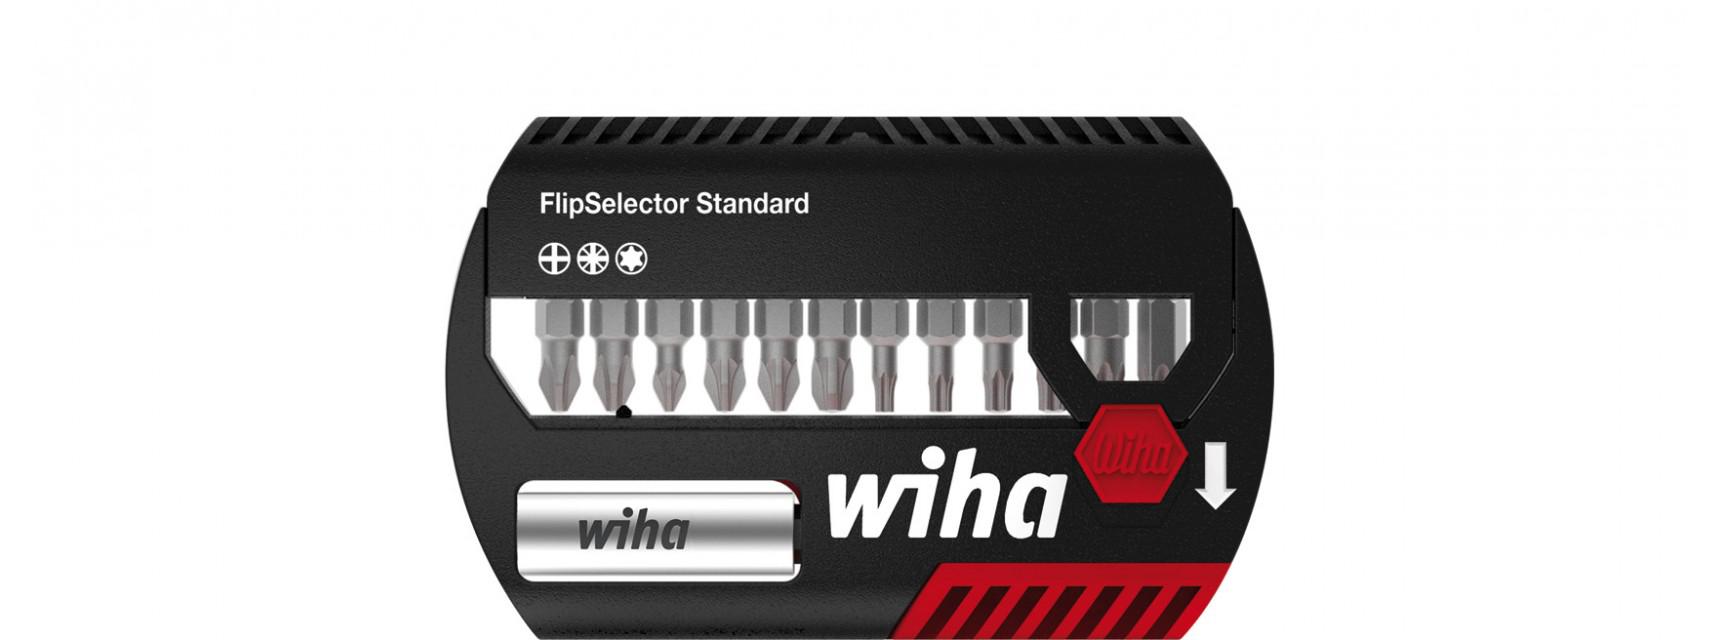 Набор бит FlipSelector Standard 25 мм SB 7947-904 WIHA 39060